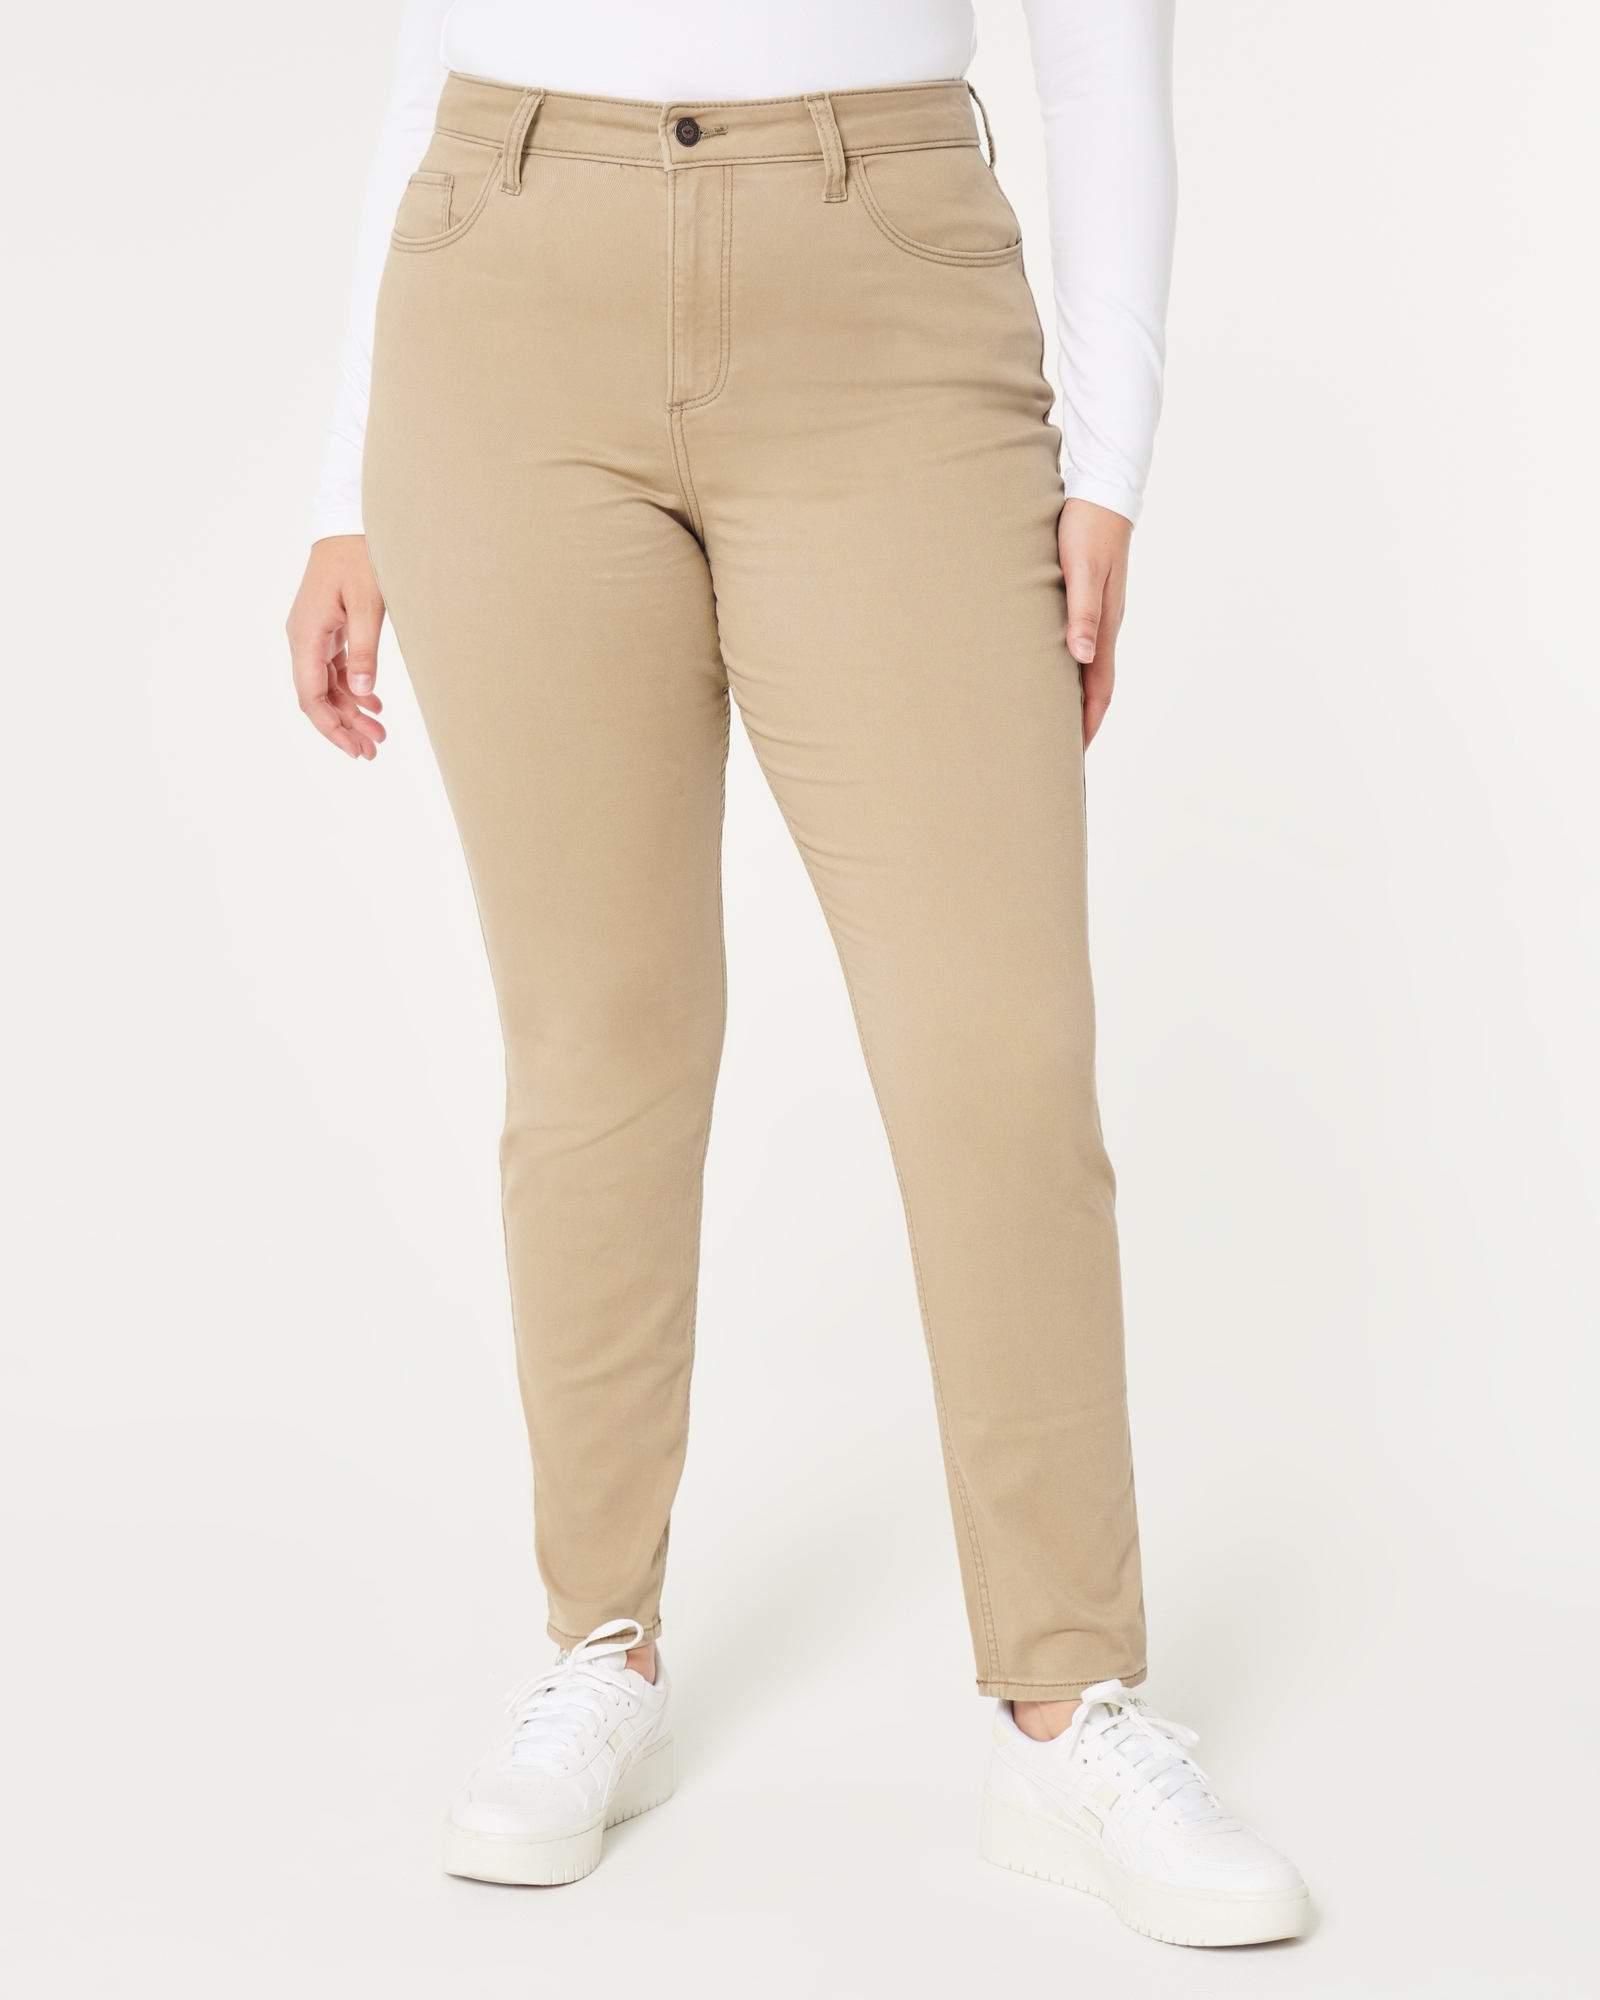 Girls' Super Stretch Pants - Khaki, Skinny Leg, Size 16